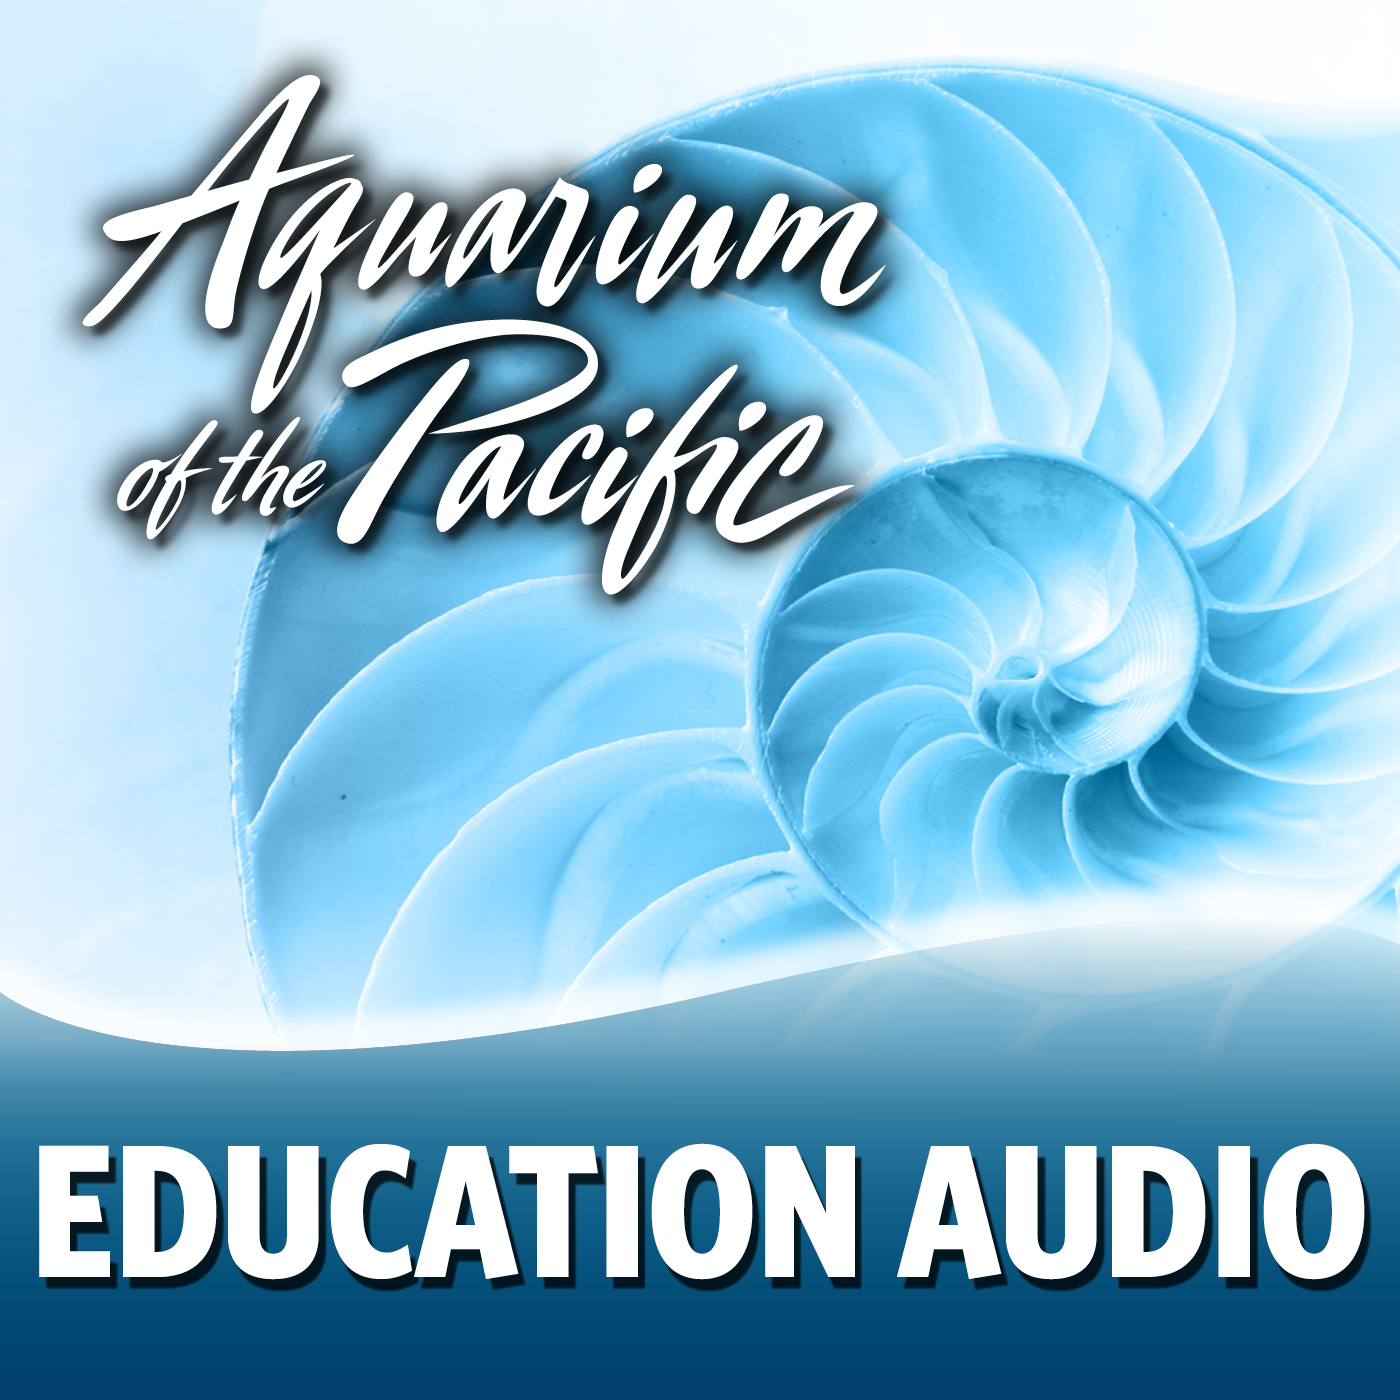 Education Audio